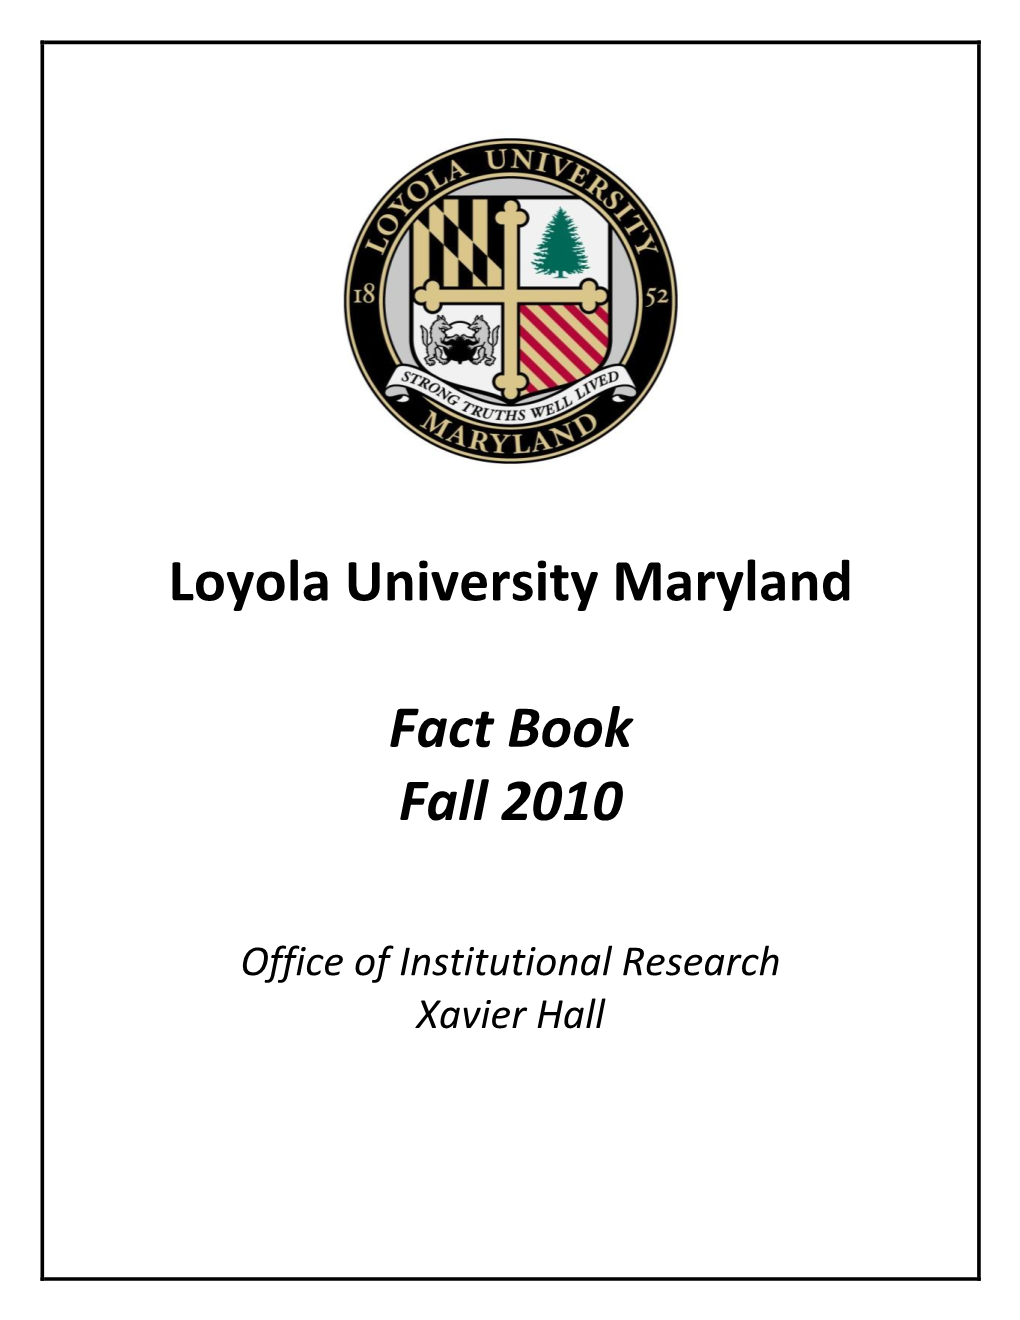 Loyola University Maryland Fall 2010 Fact Book